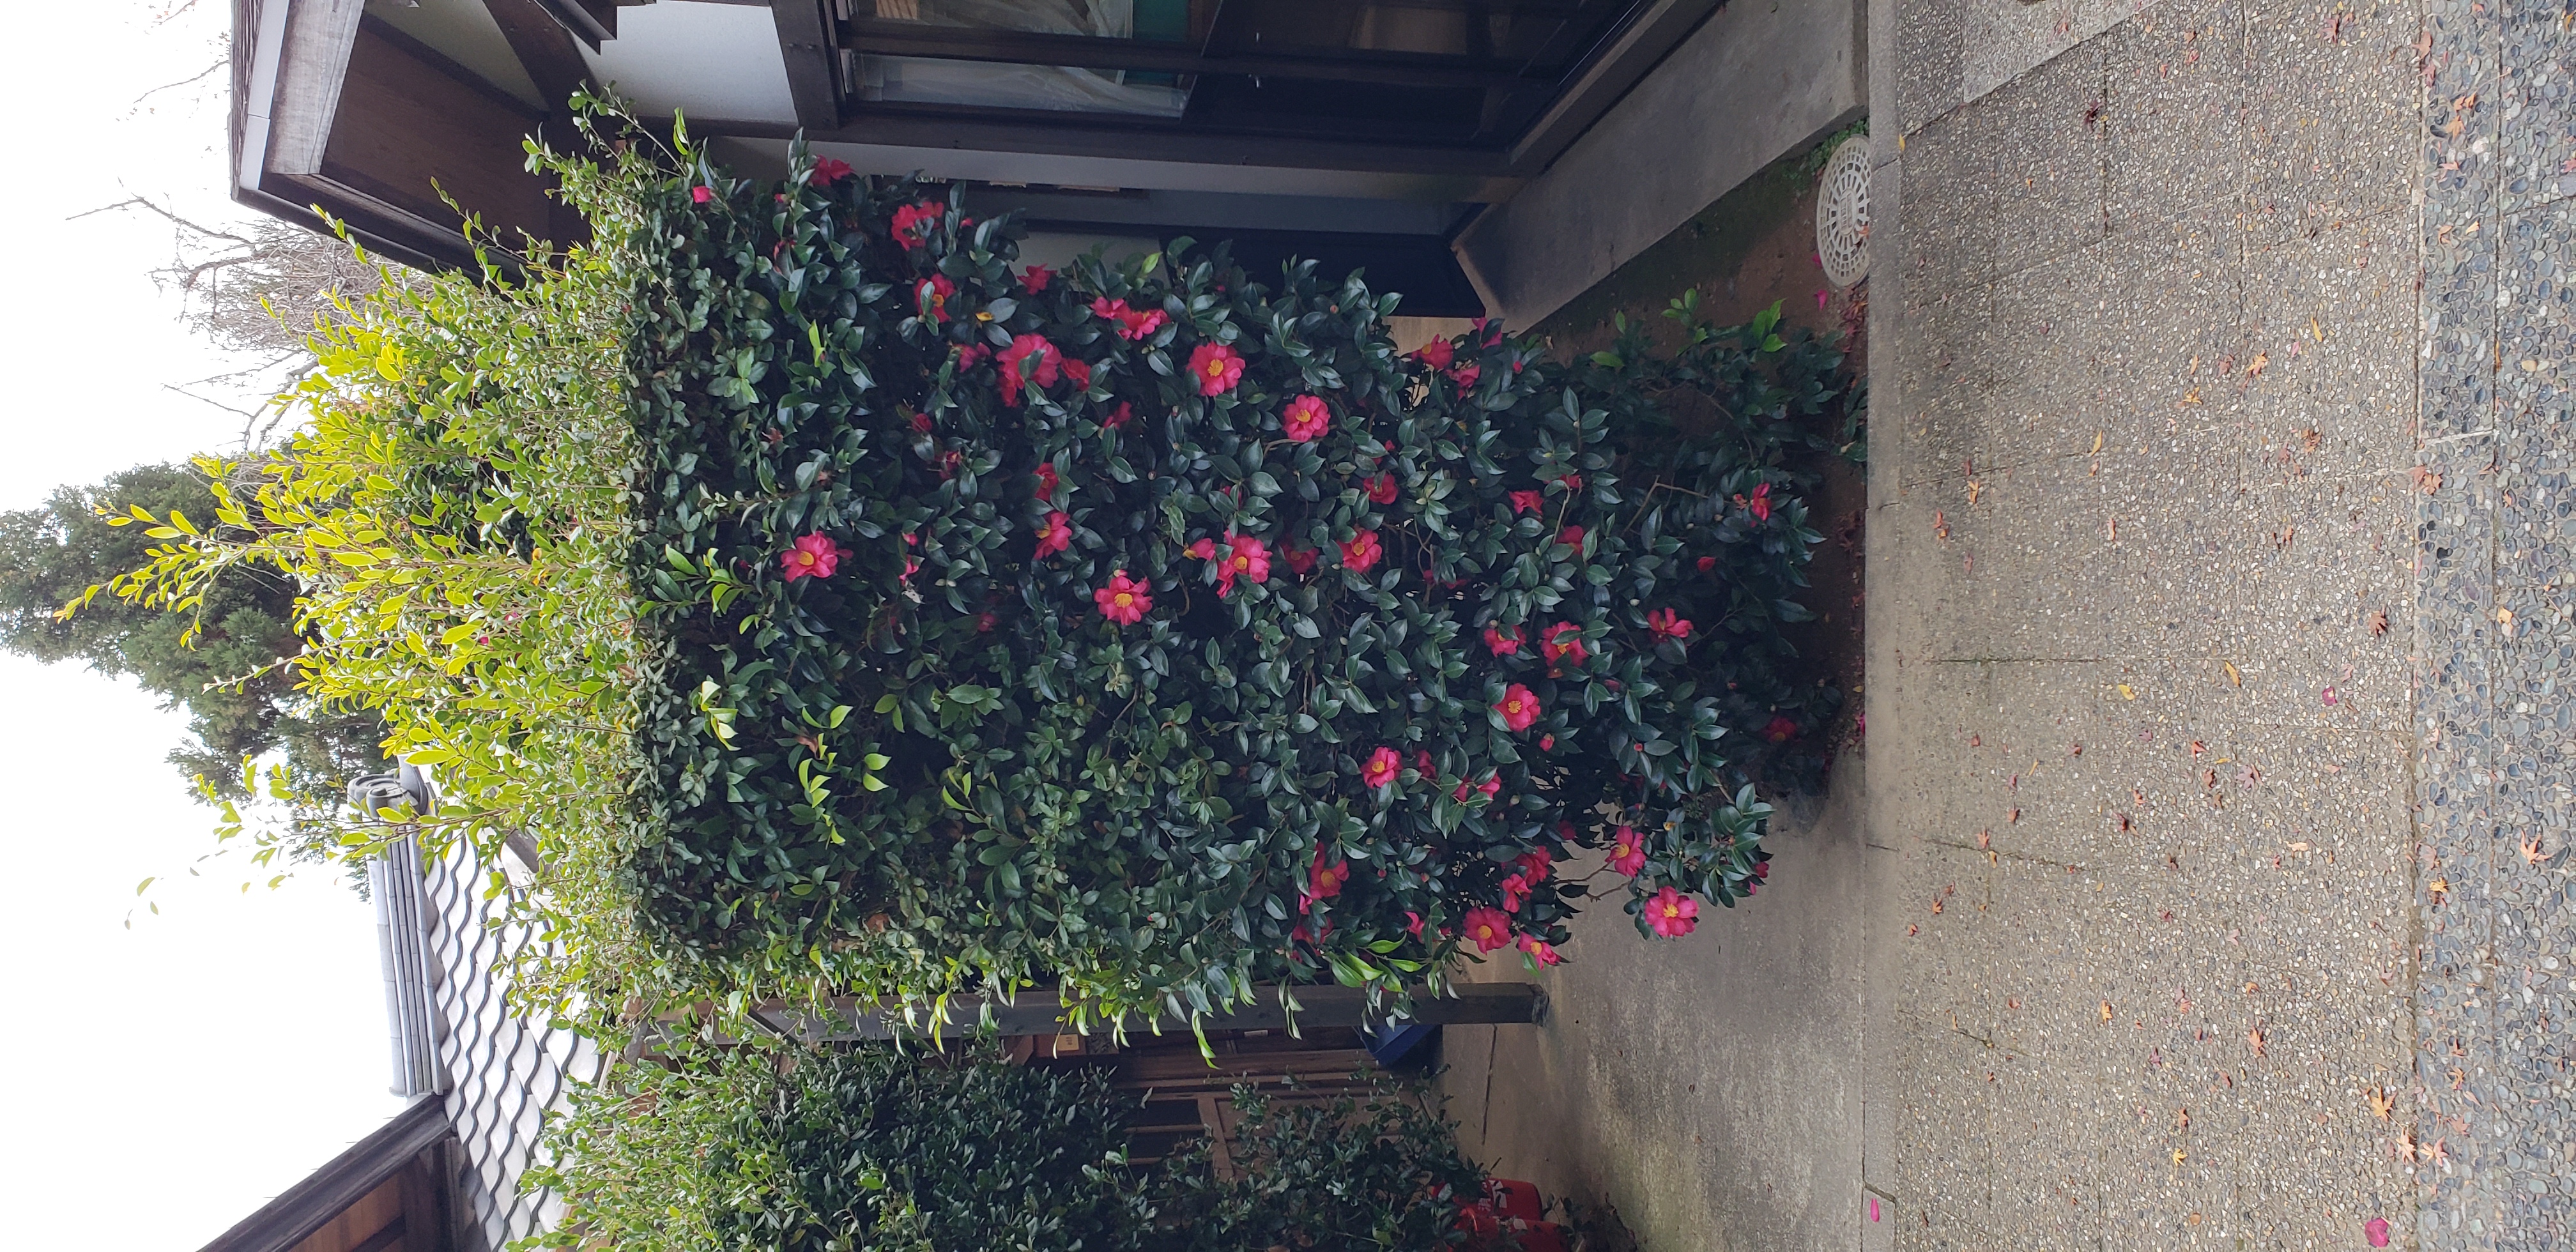 Camellia sasanqua plantplacesimage20181209_140617.jpg